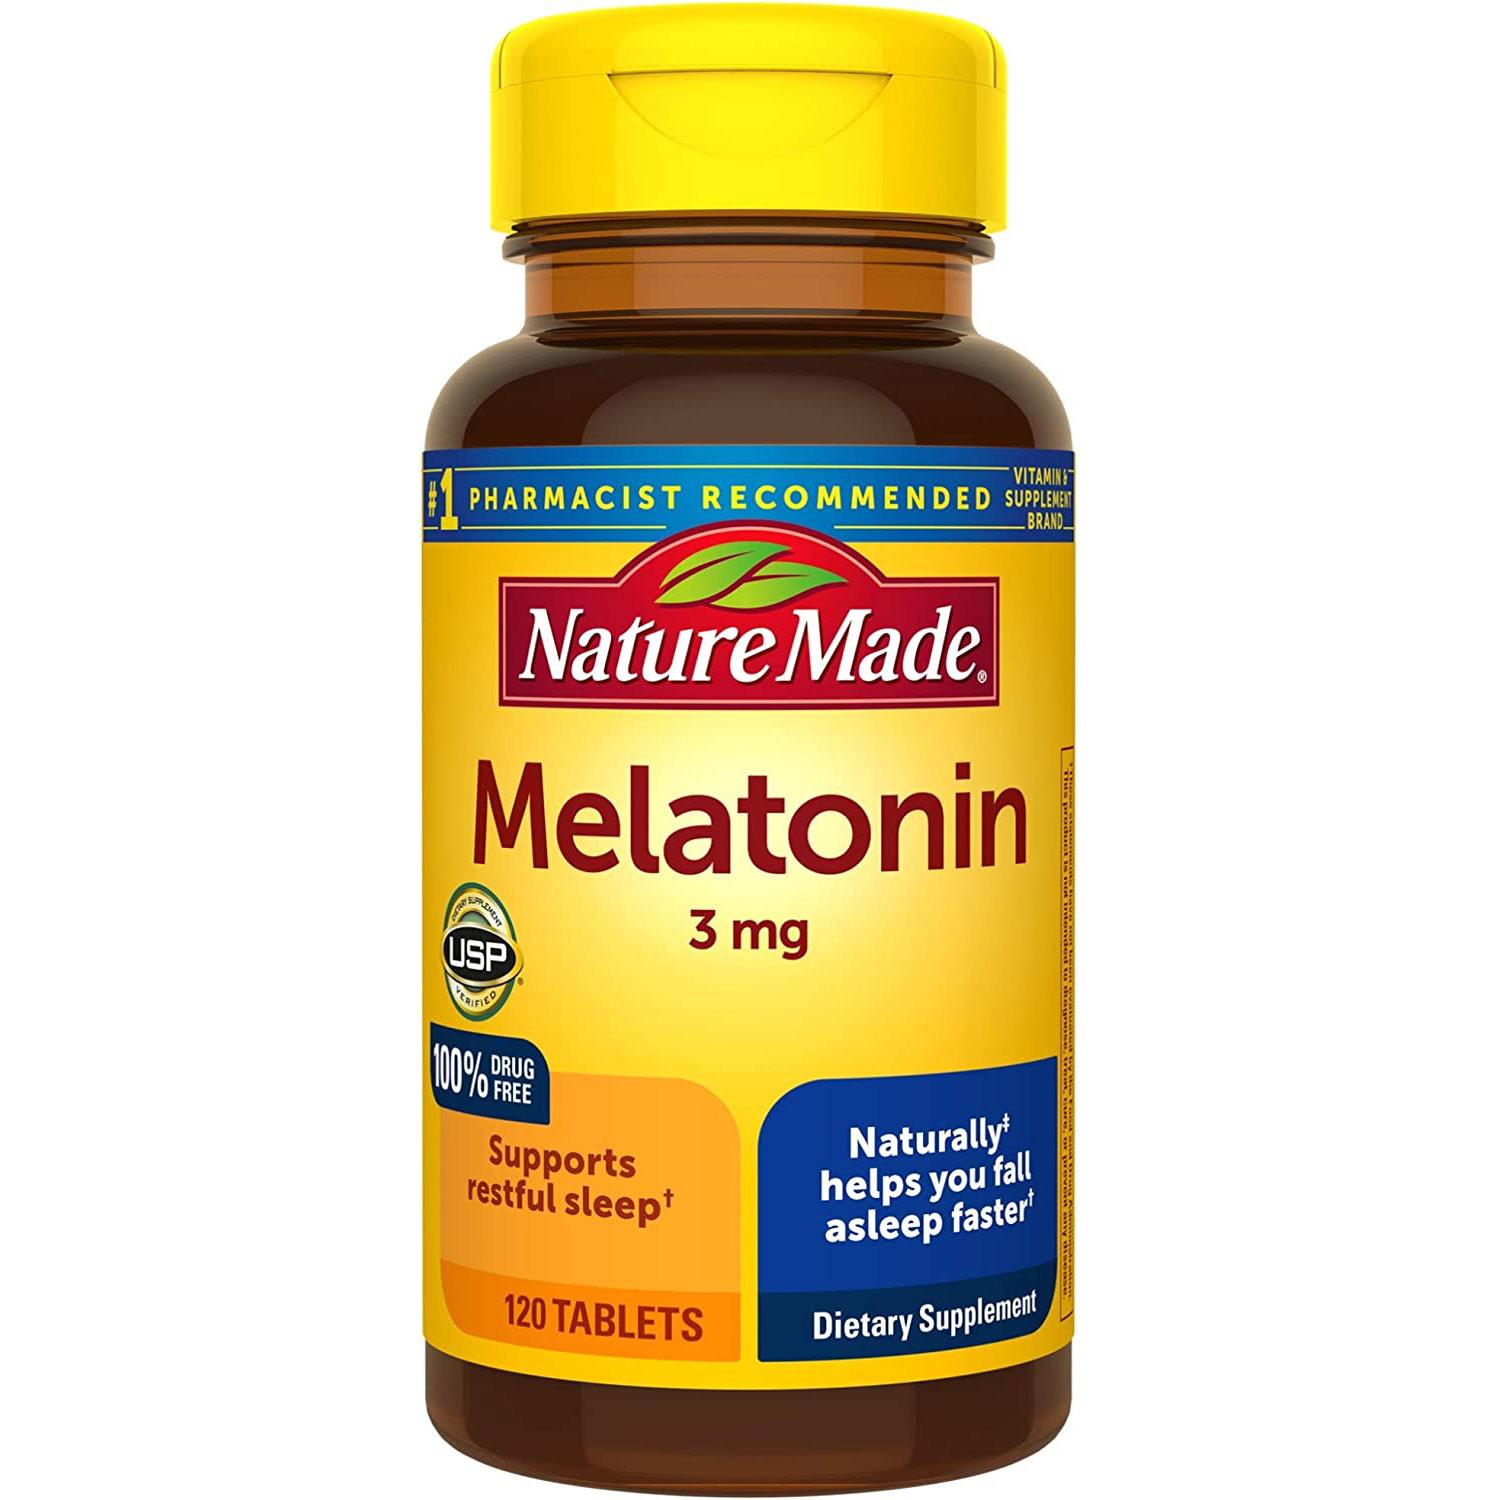 Nature Made 3 mg Melatonin Tablets for $4.67